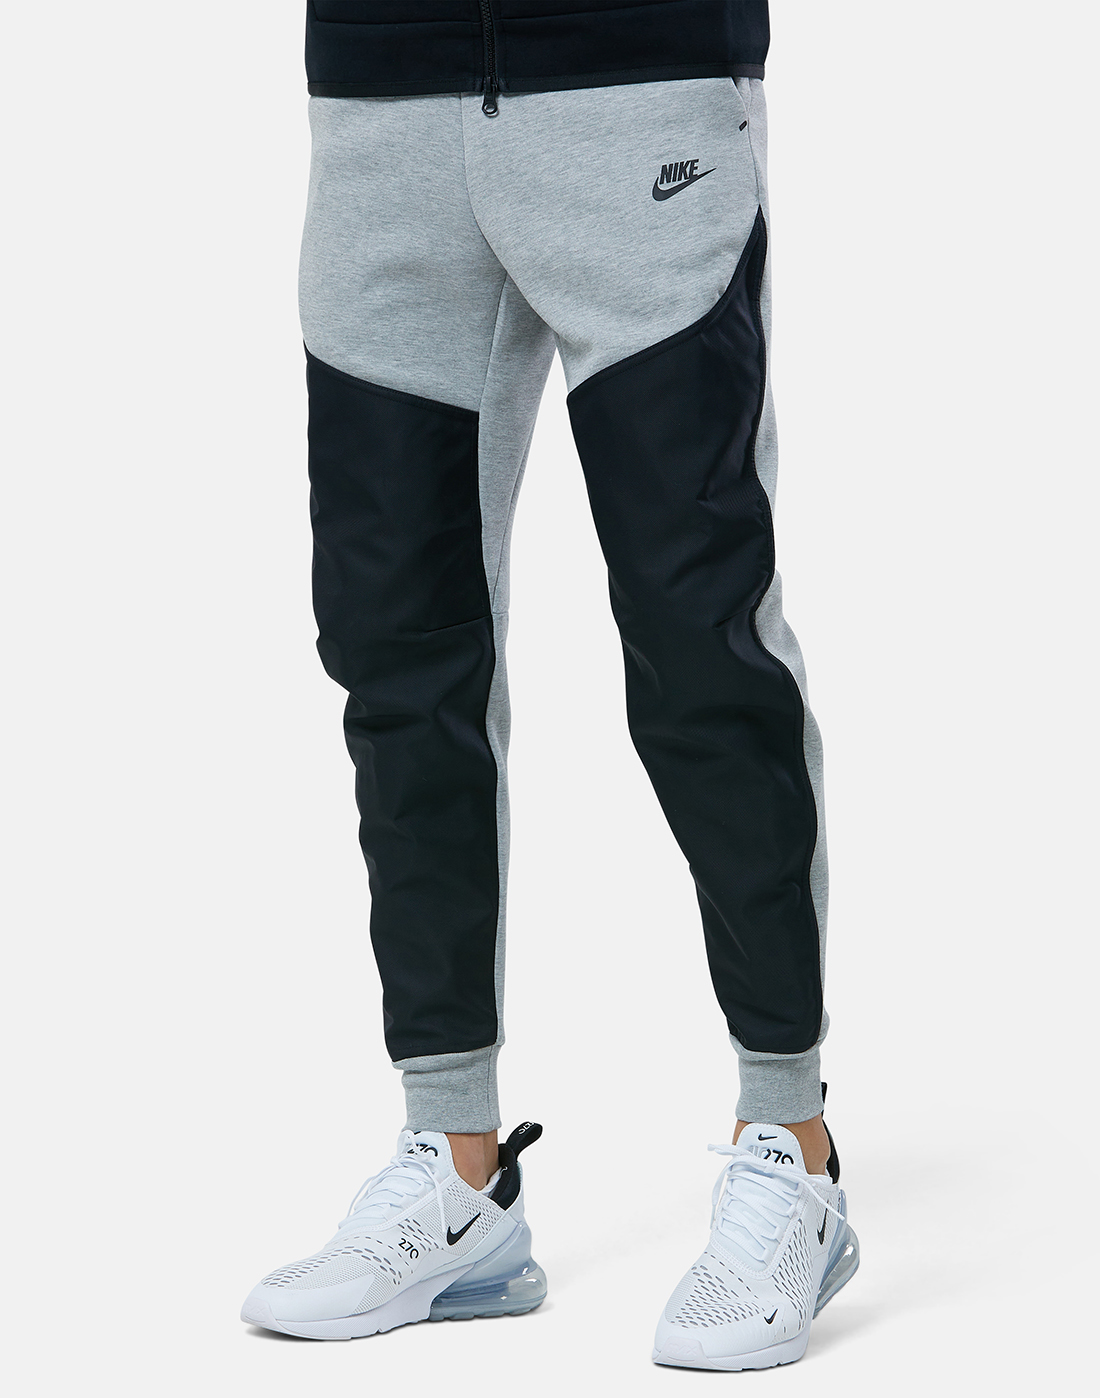 Nike Mens Tech Fleece Overlay Pants - Grey | Life Style Sports IE